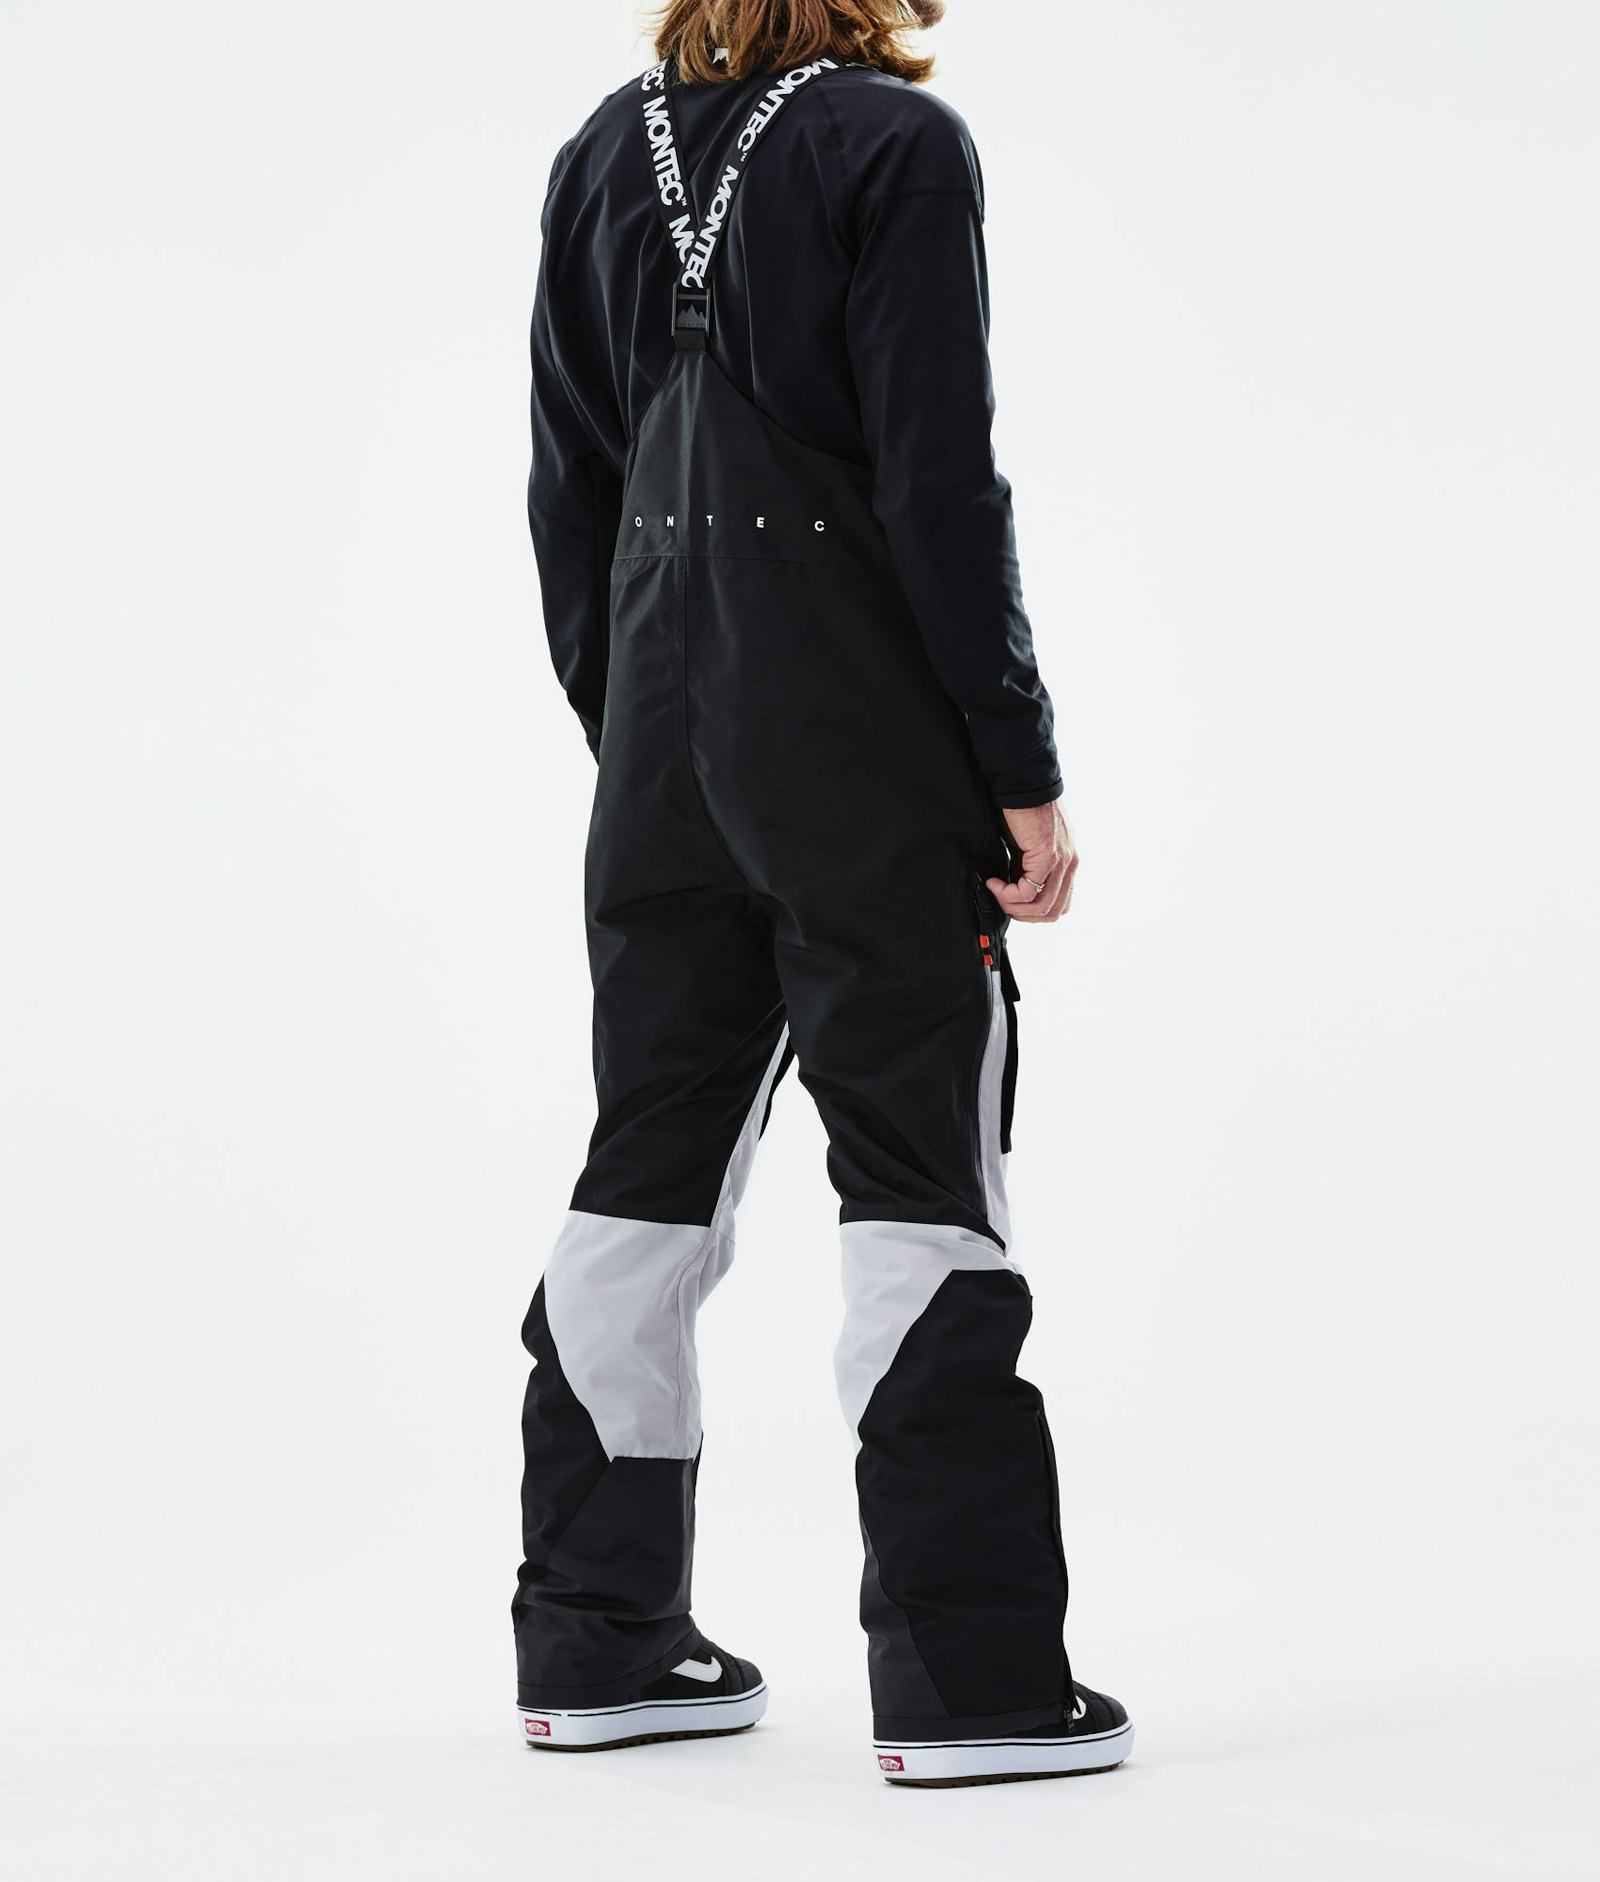 Fawk 2021 Snowboard Pants Men Black/Light Grey/Black Renewed